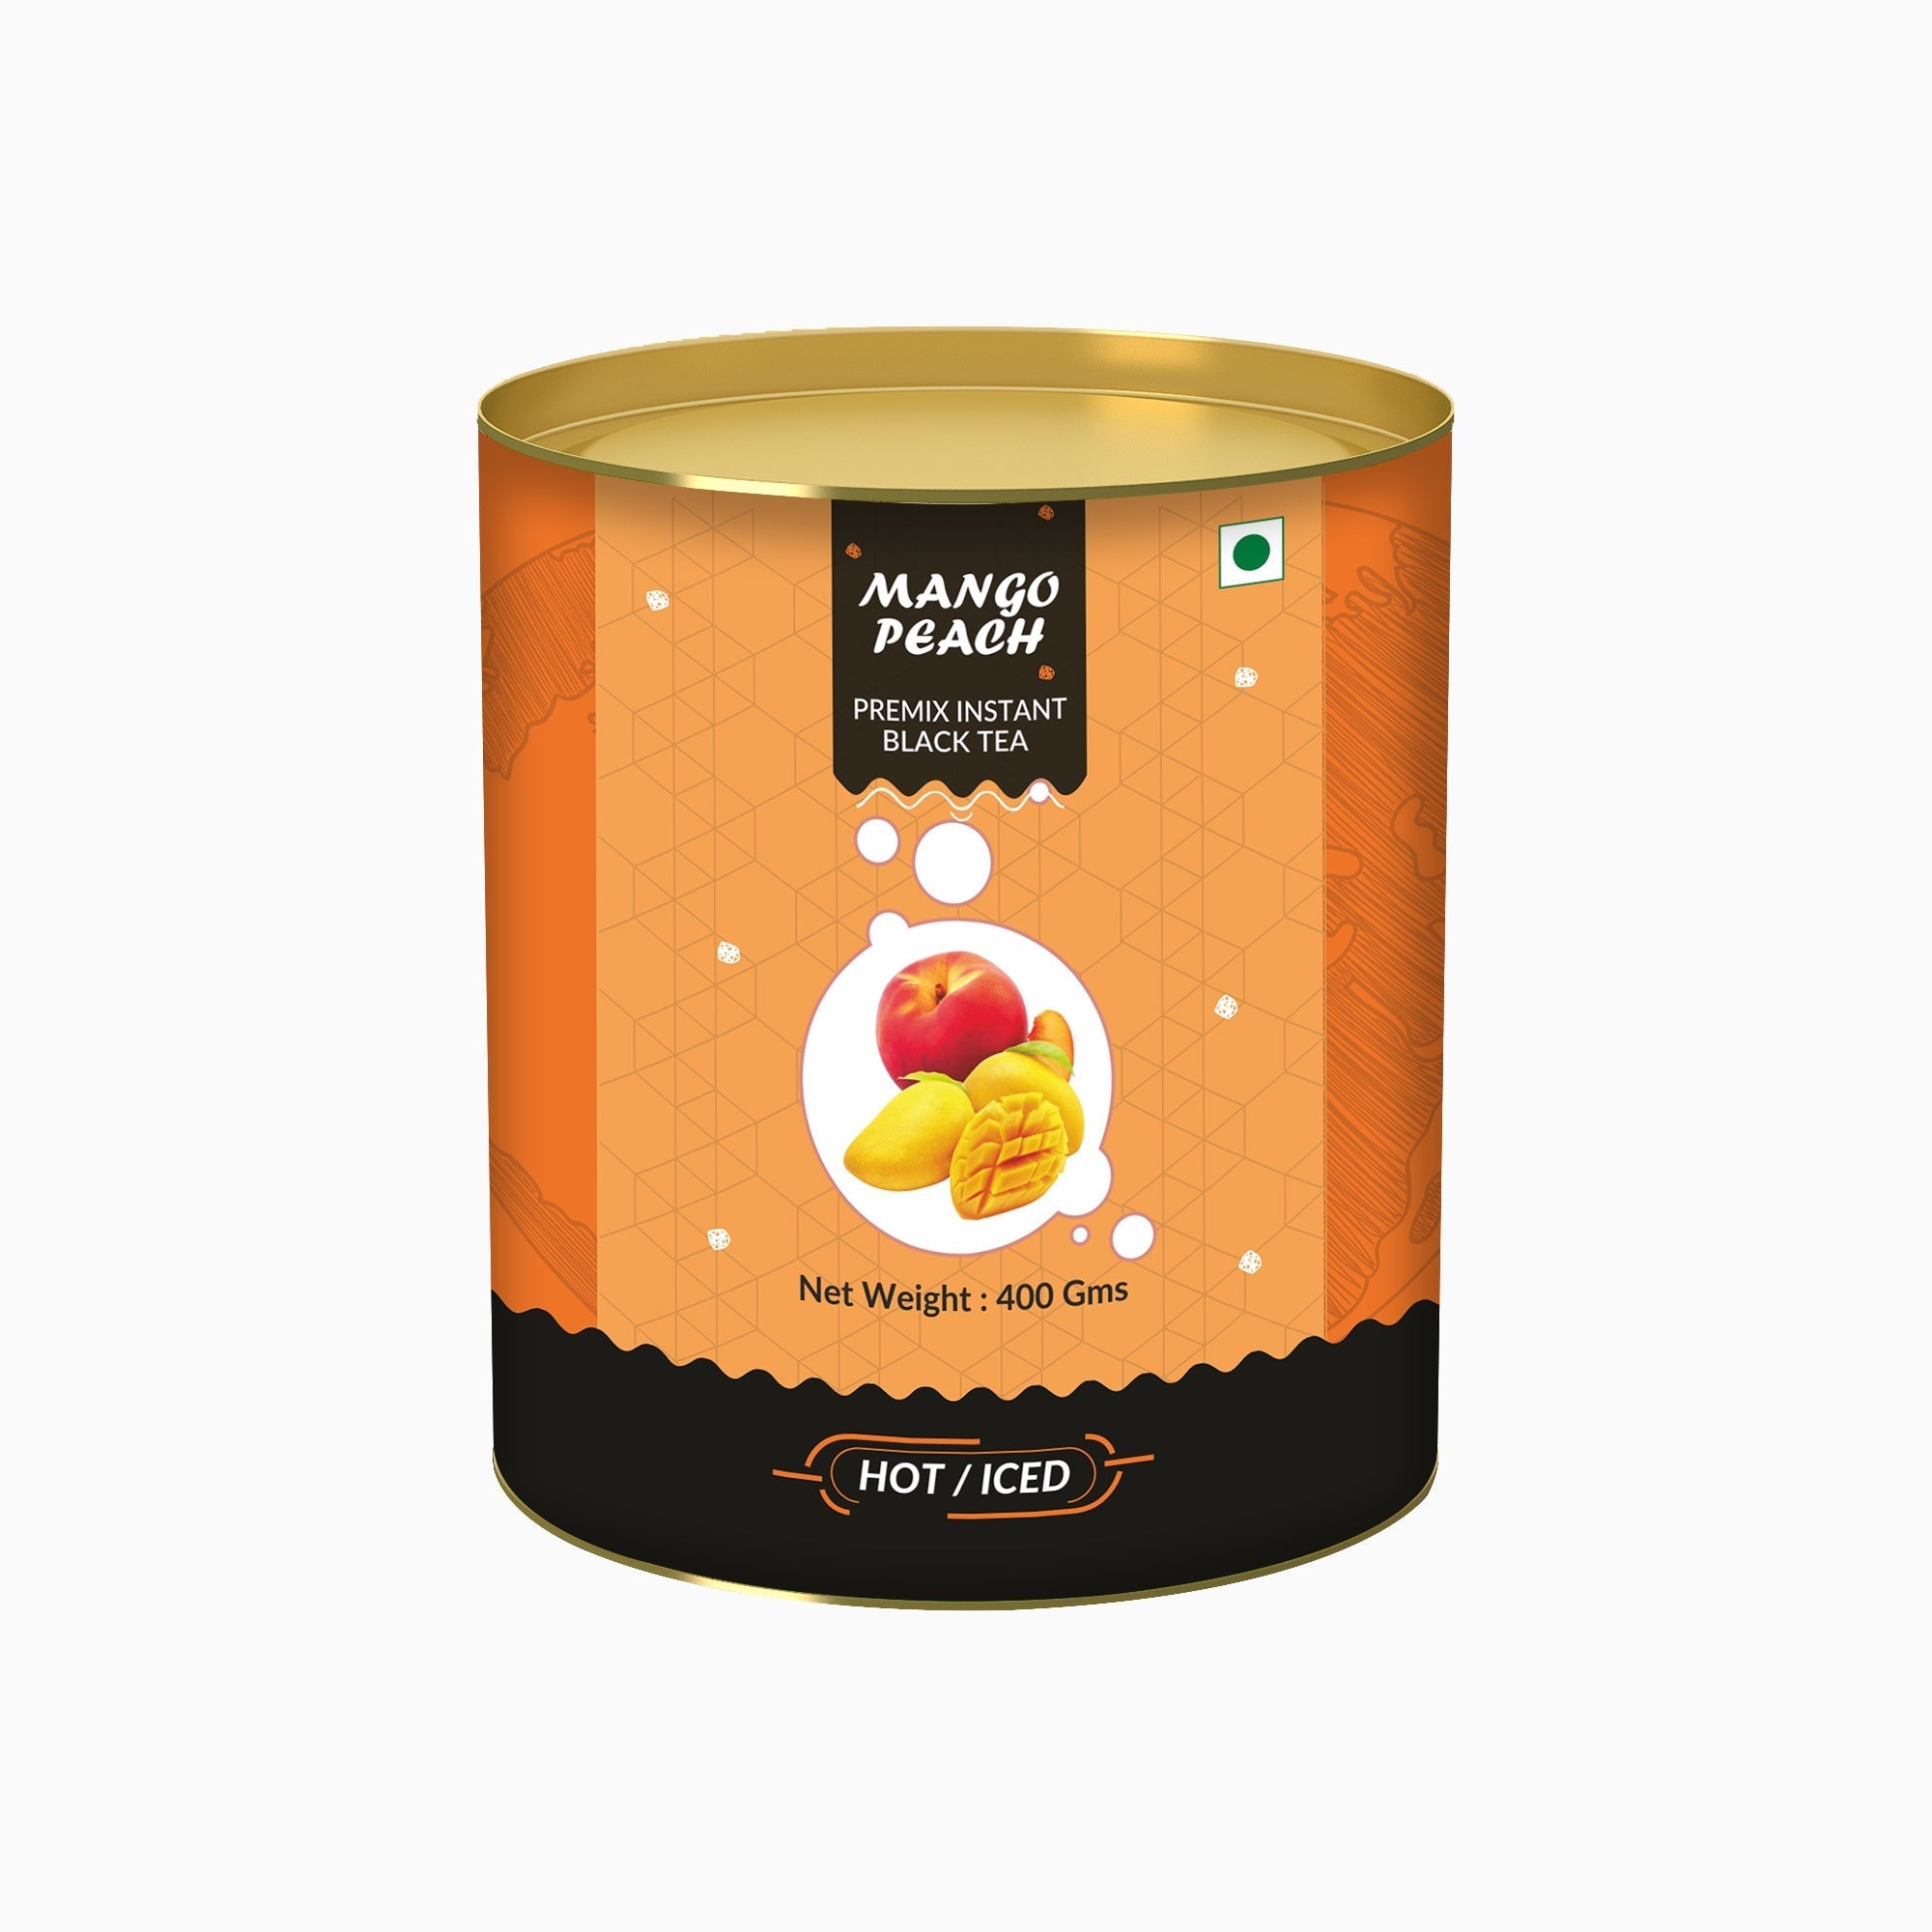 Mango & Peach Flavored Instant Black Tea - 400 gms